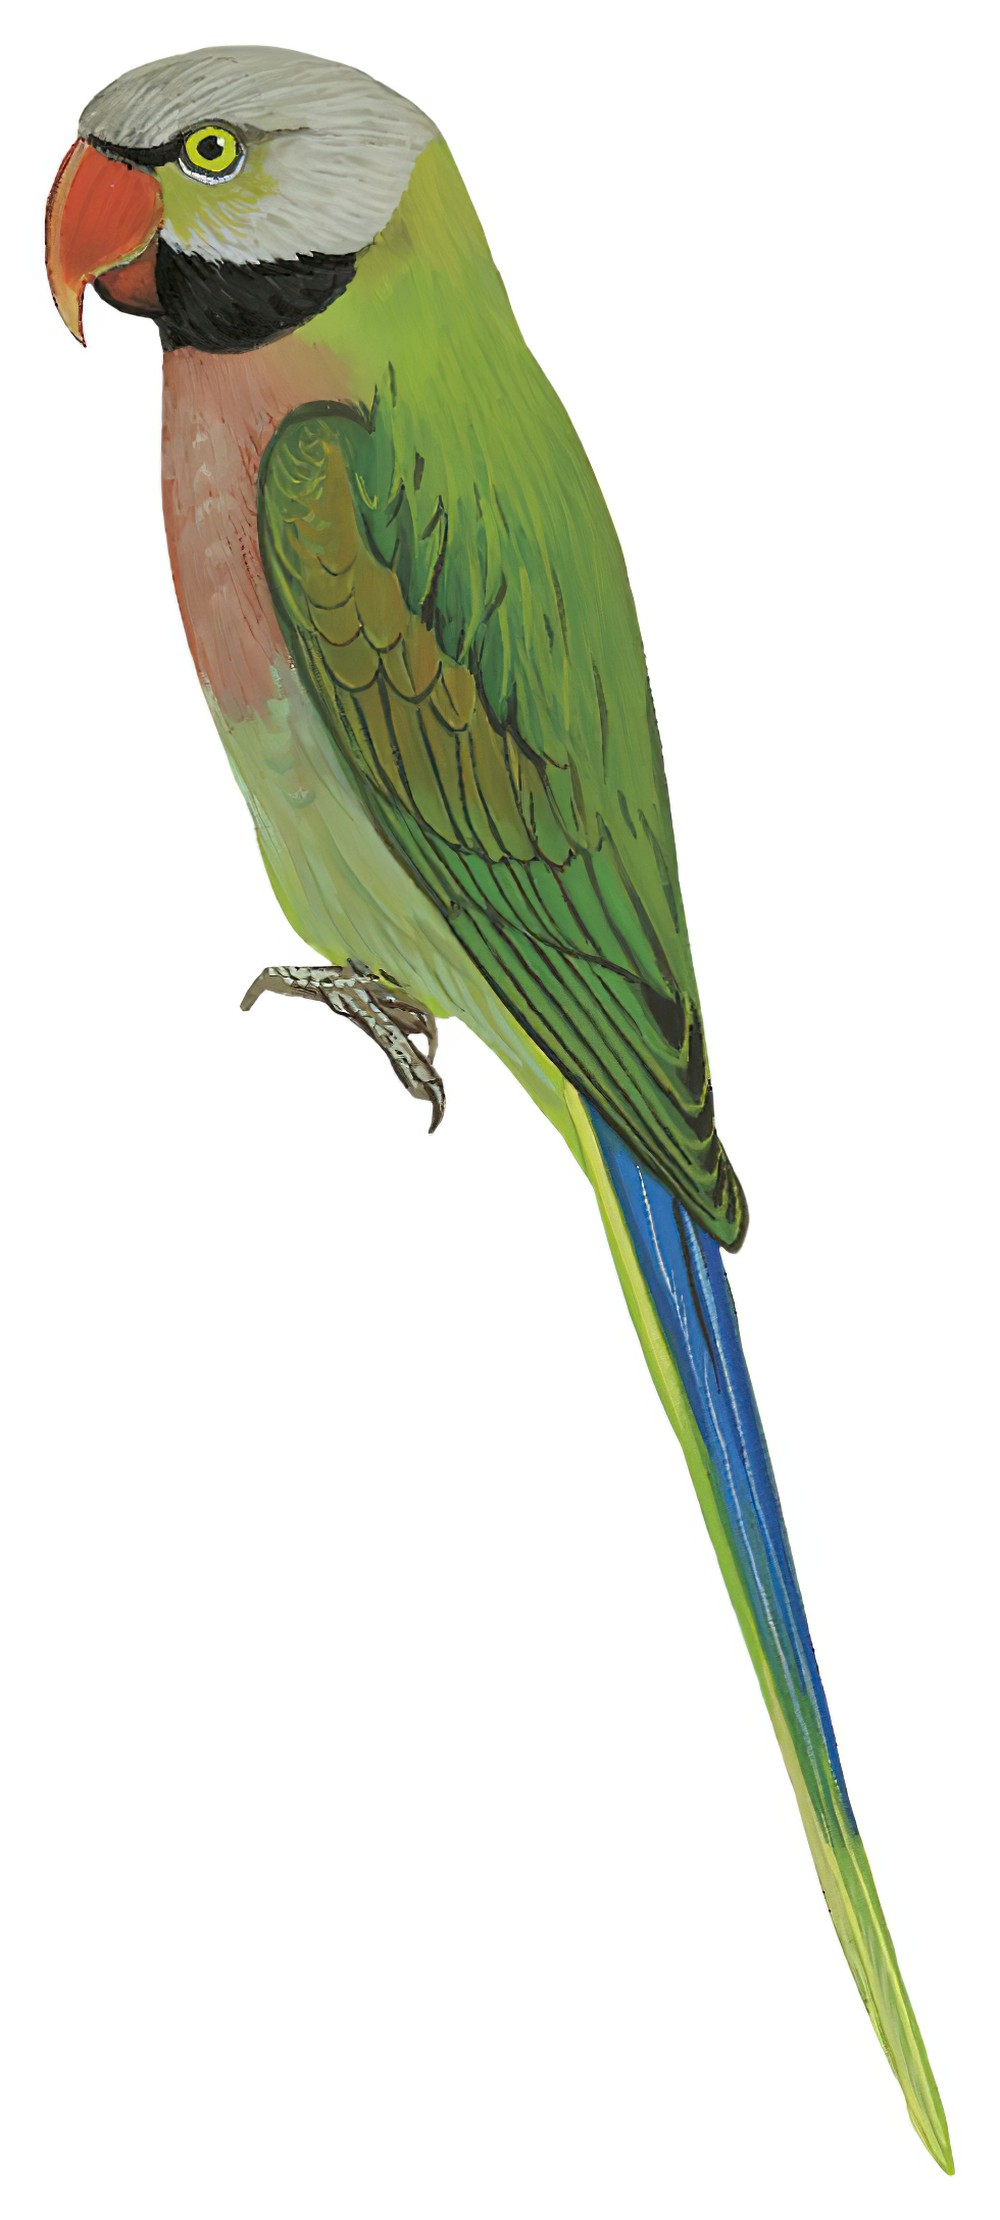 Red-breasted Parakeet / Psittacula alexandri